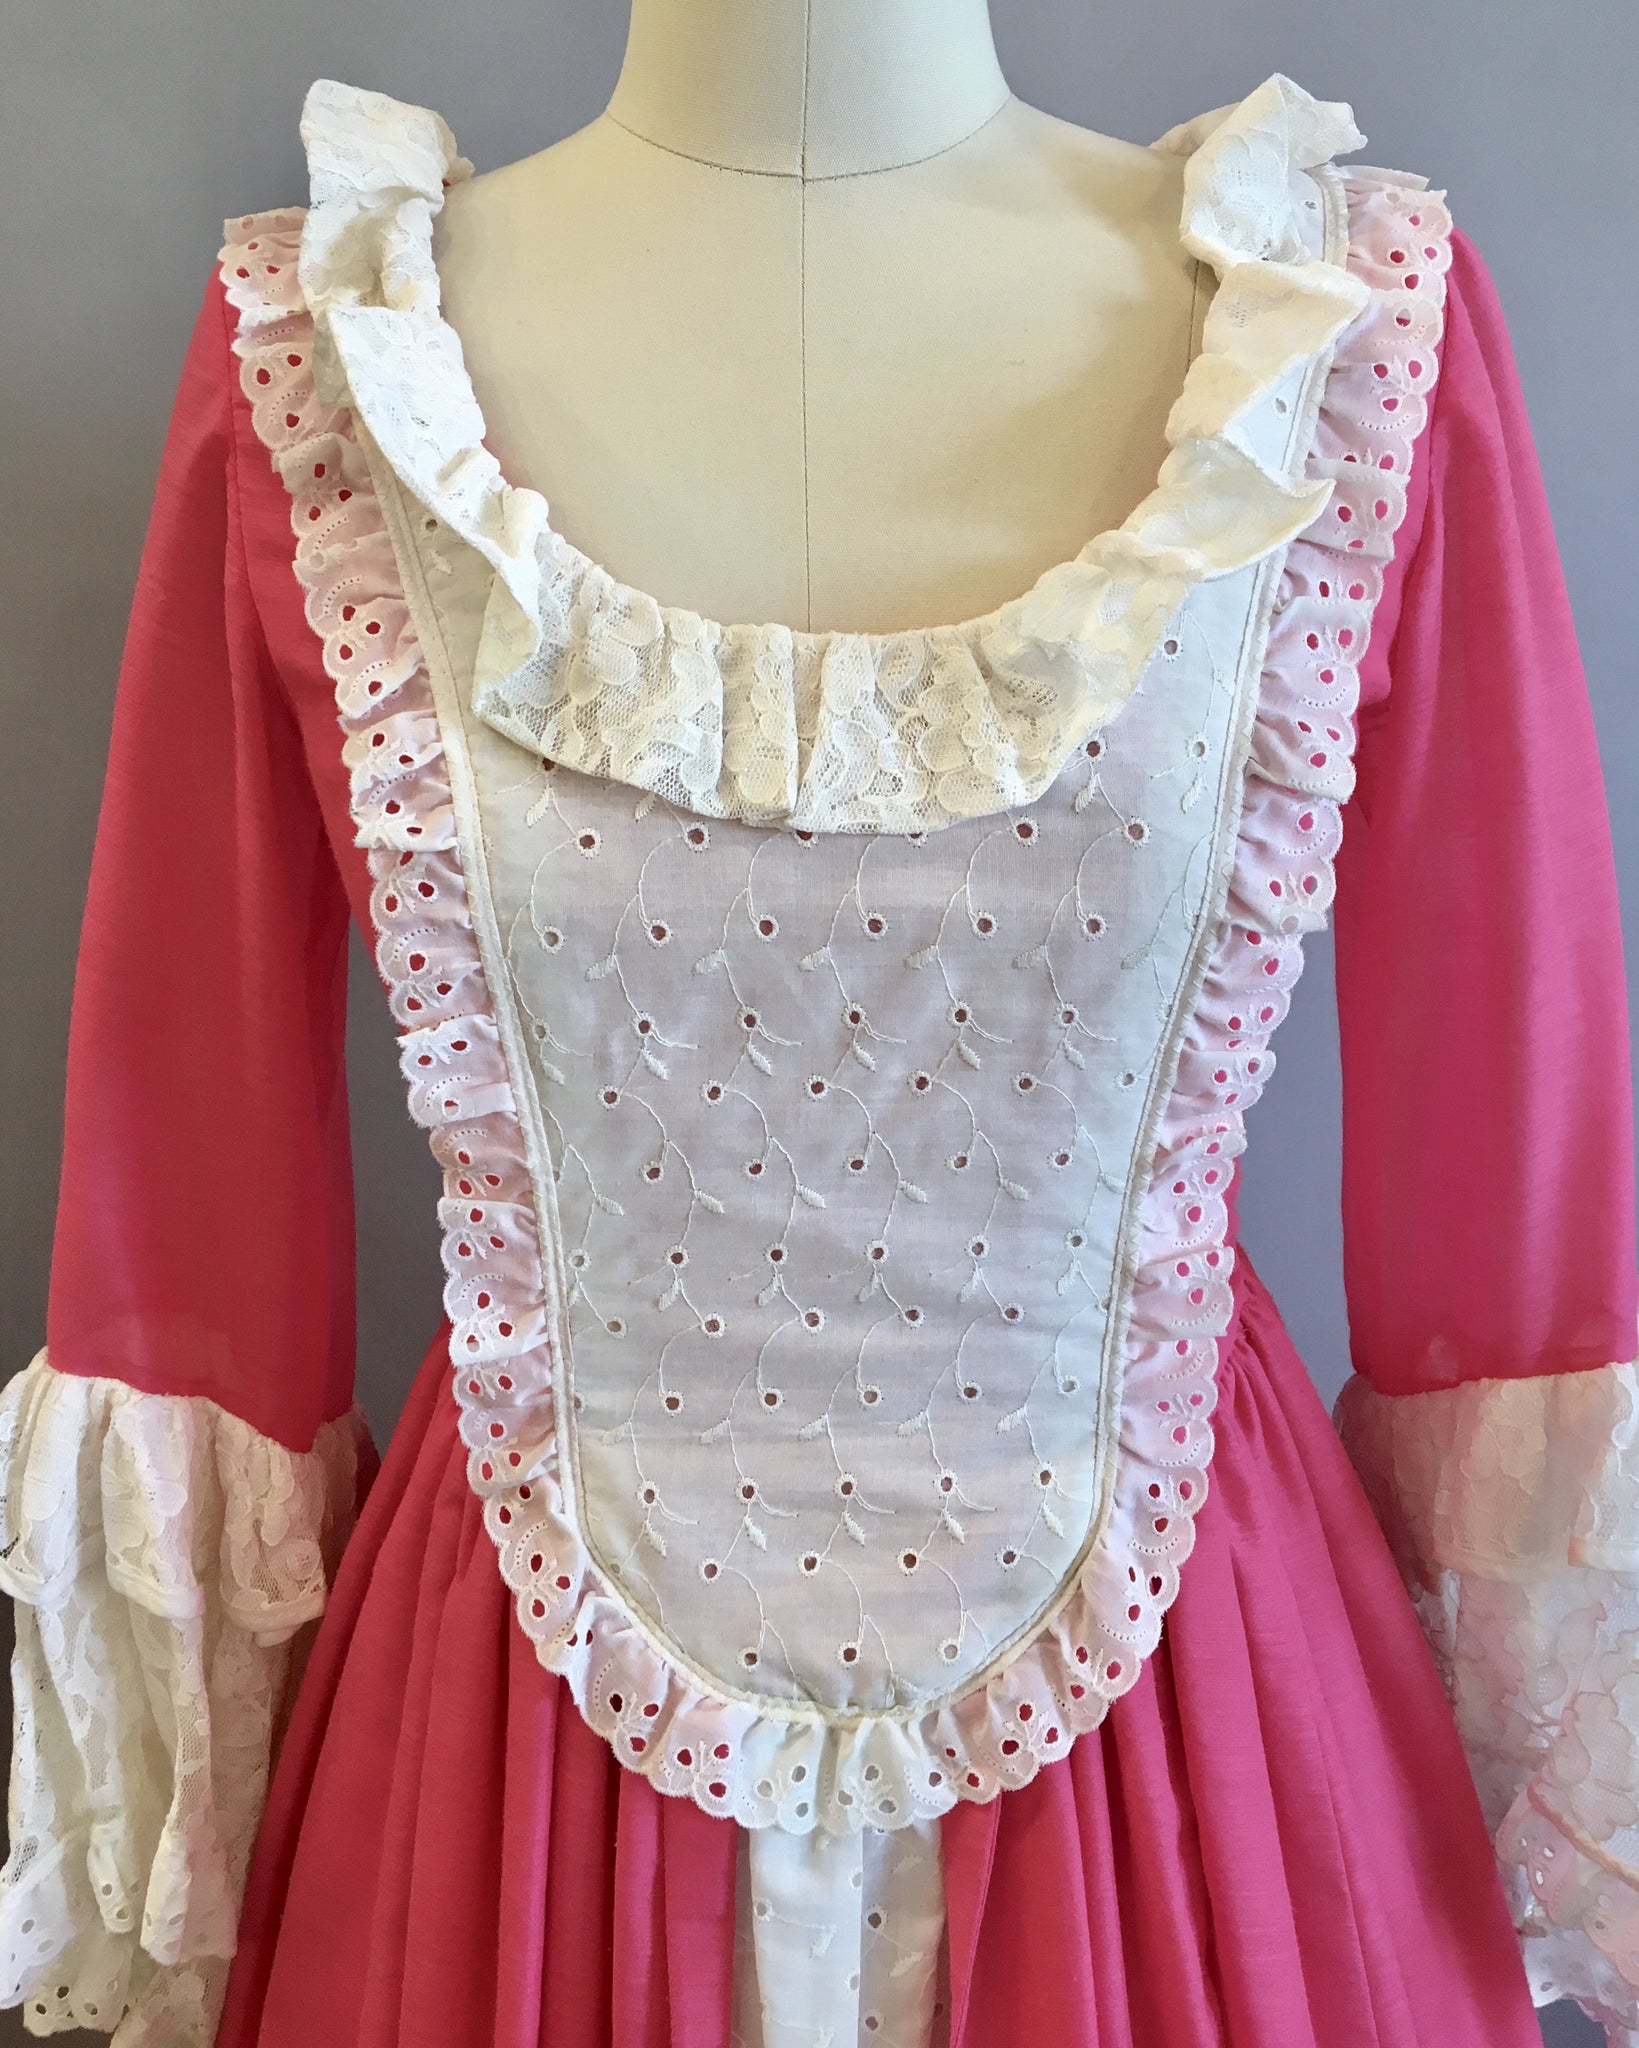 Colonial Dress